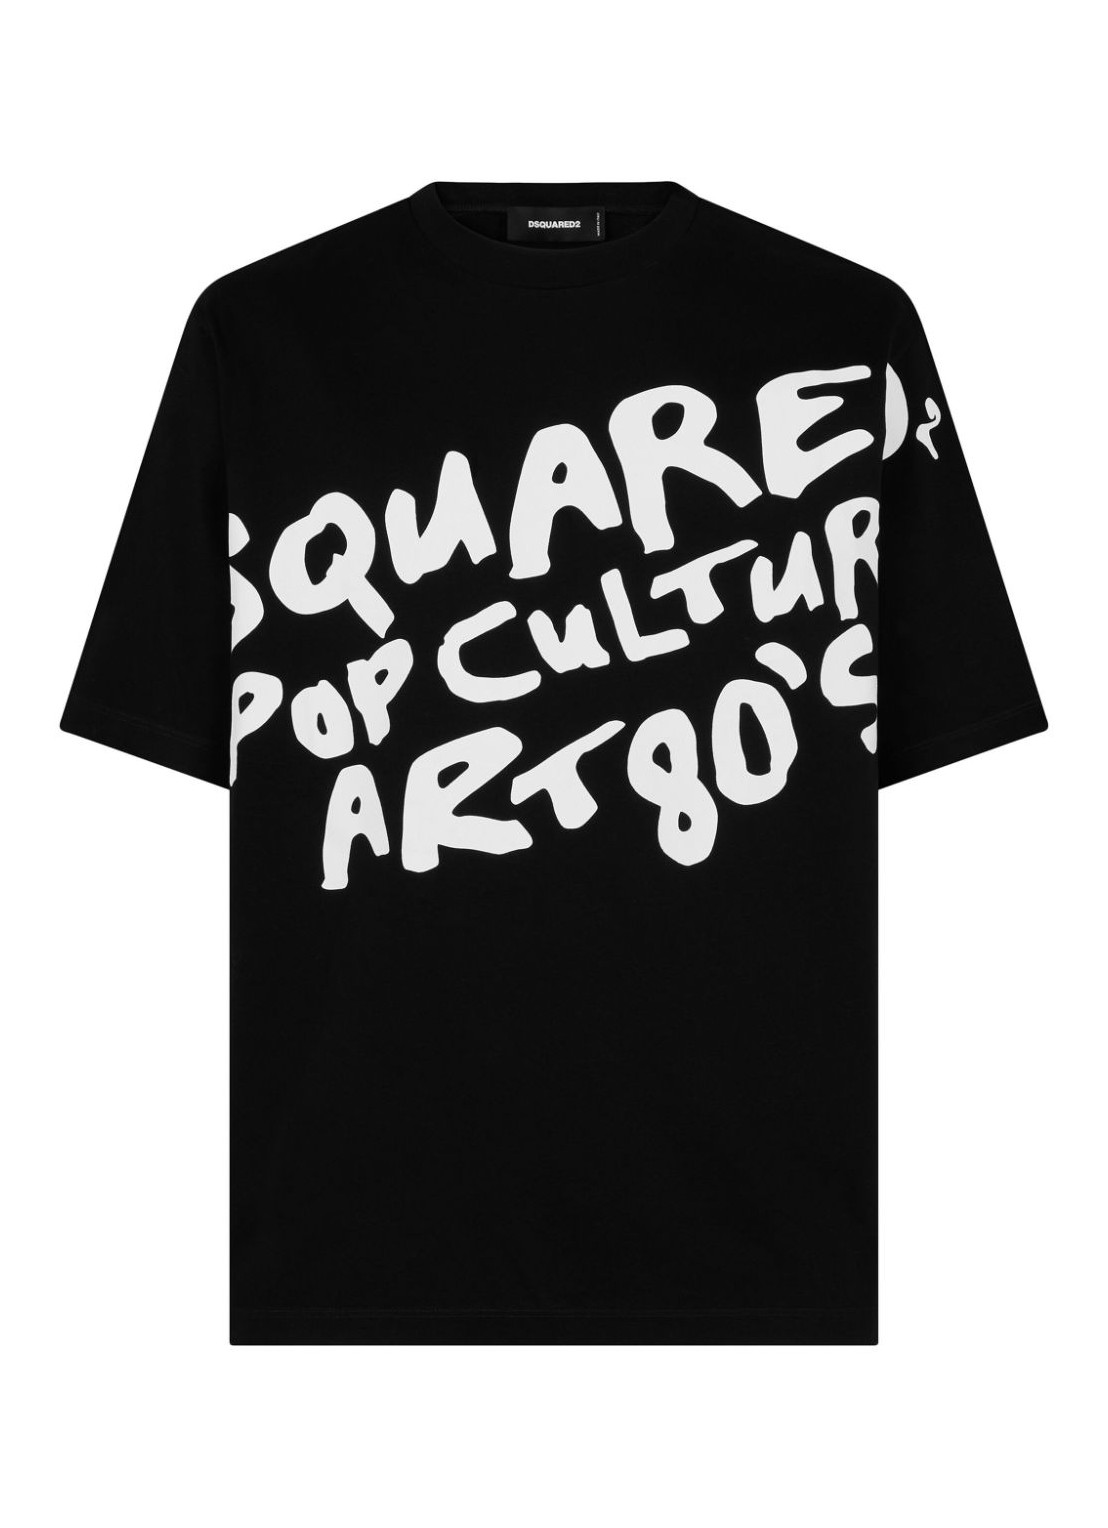 Camiseta dsquared t-shirt man d2 pop 80's loose fit tee s74gd1238s23009 900 talla M
 